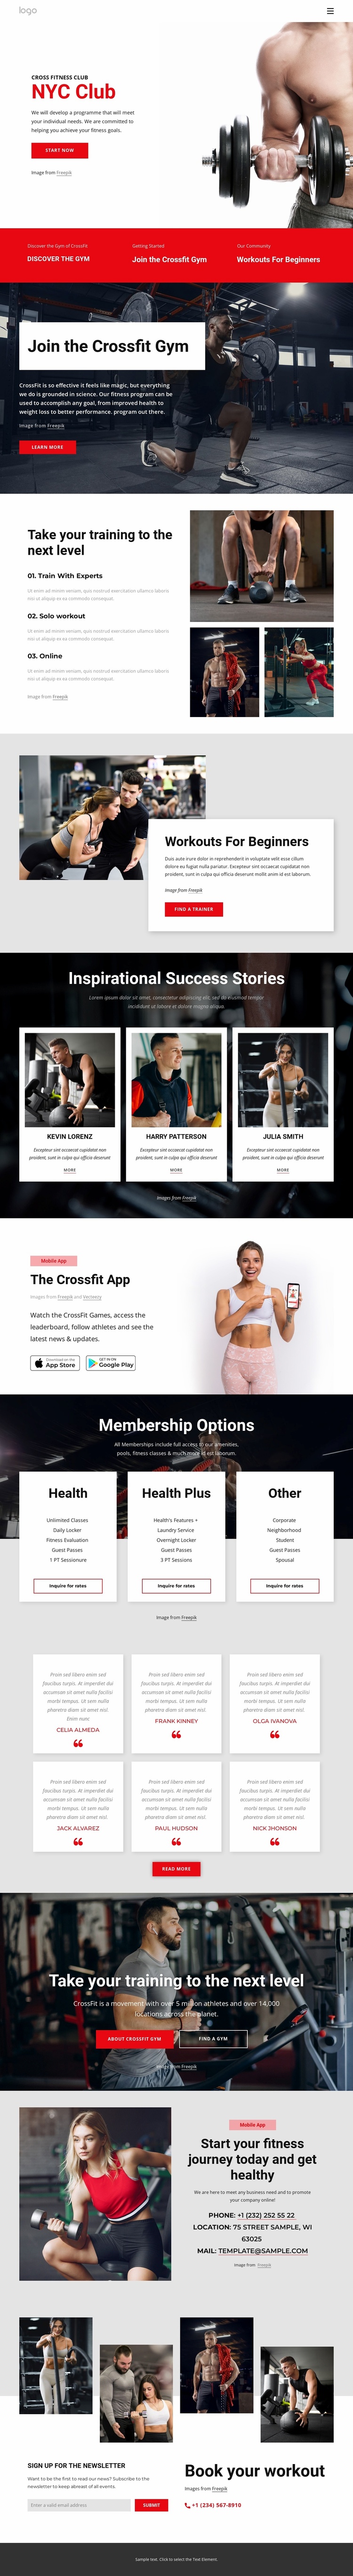 Cross fitness club Ecommerce Website Design